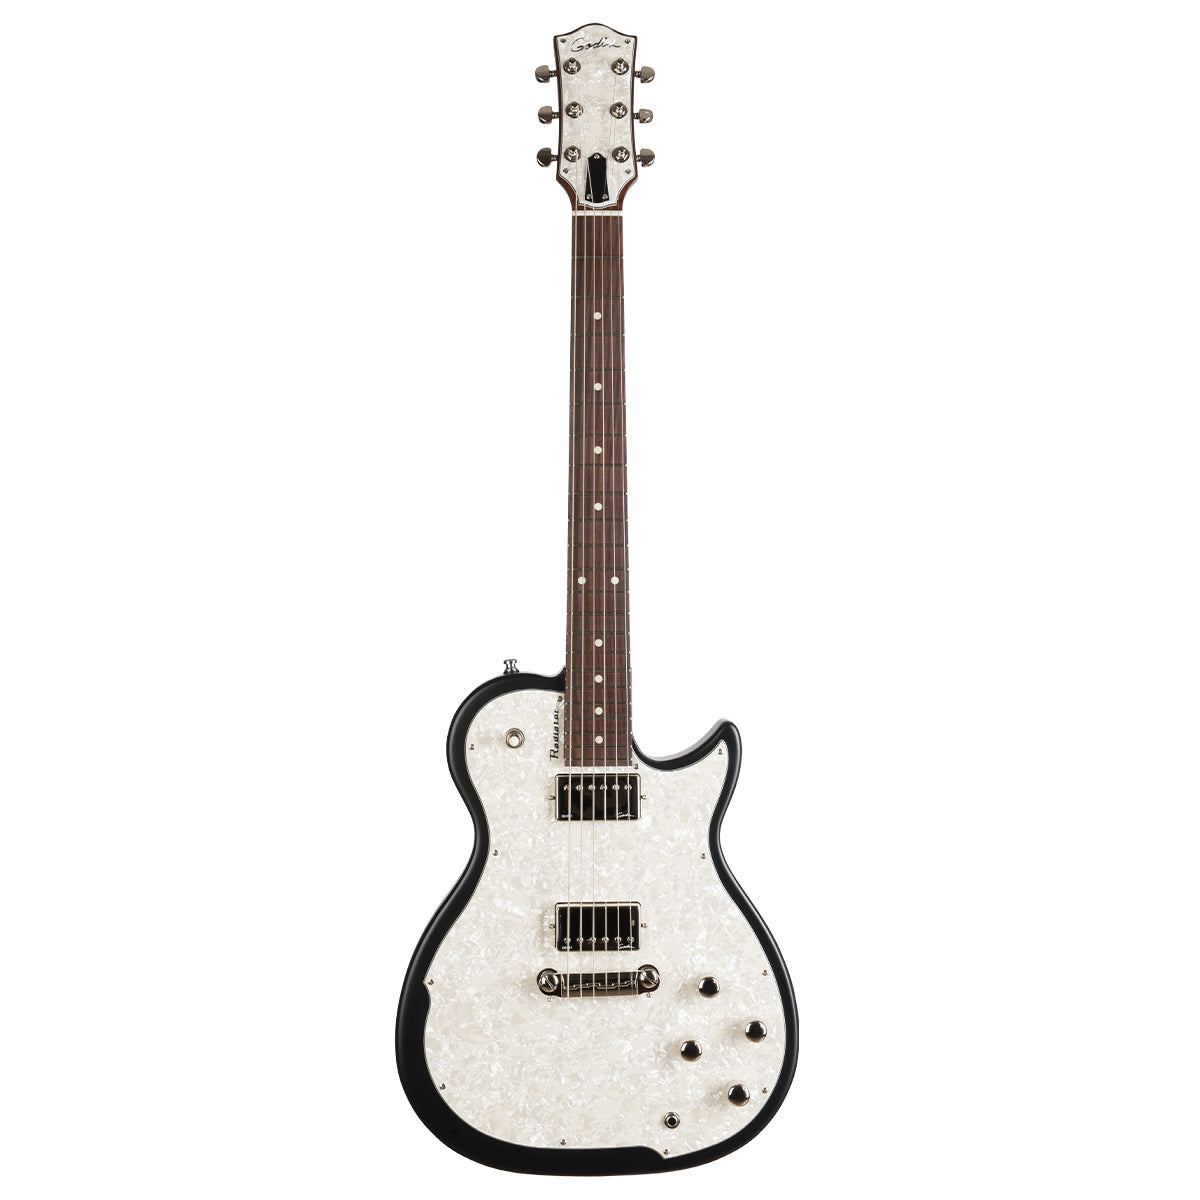 Godin Radiator Electric Guitar ~ Bourbon Burst RN, Electric Guitar for sale at Richards Guitars.